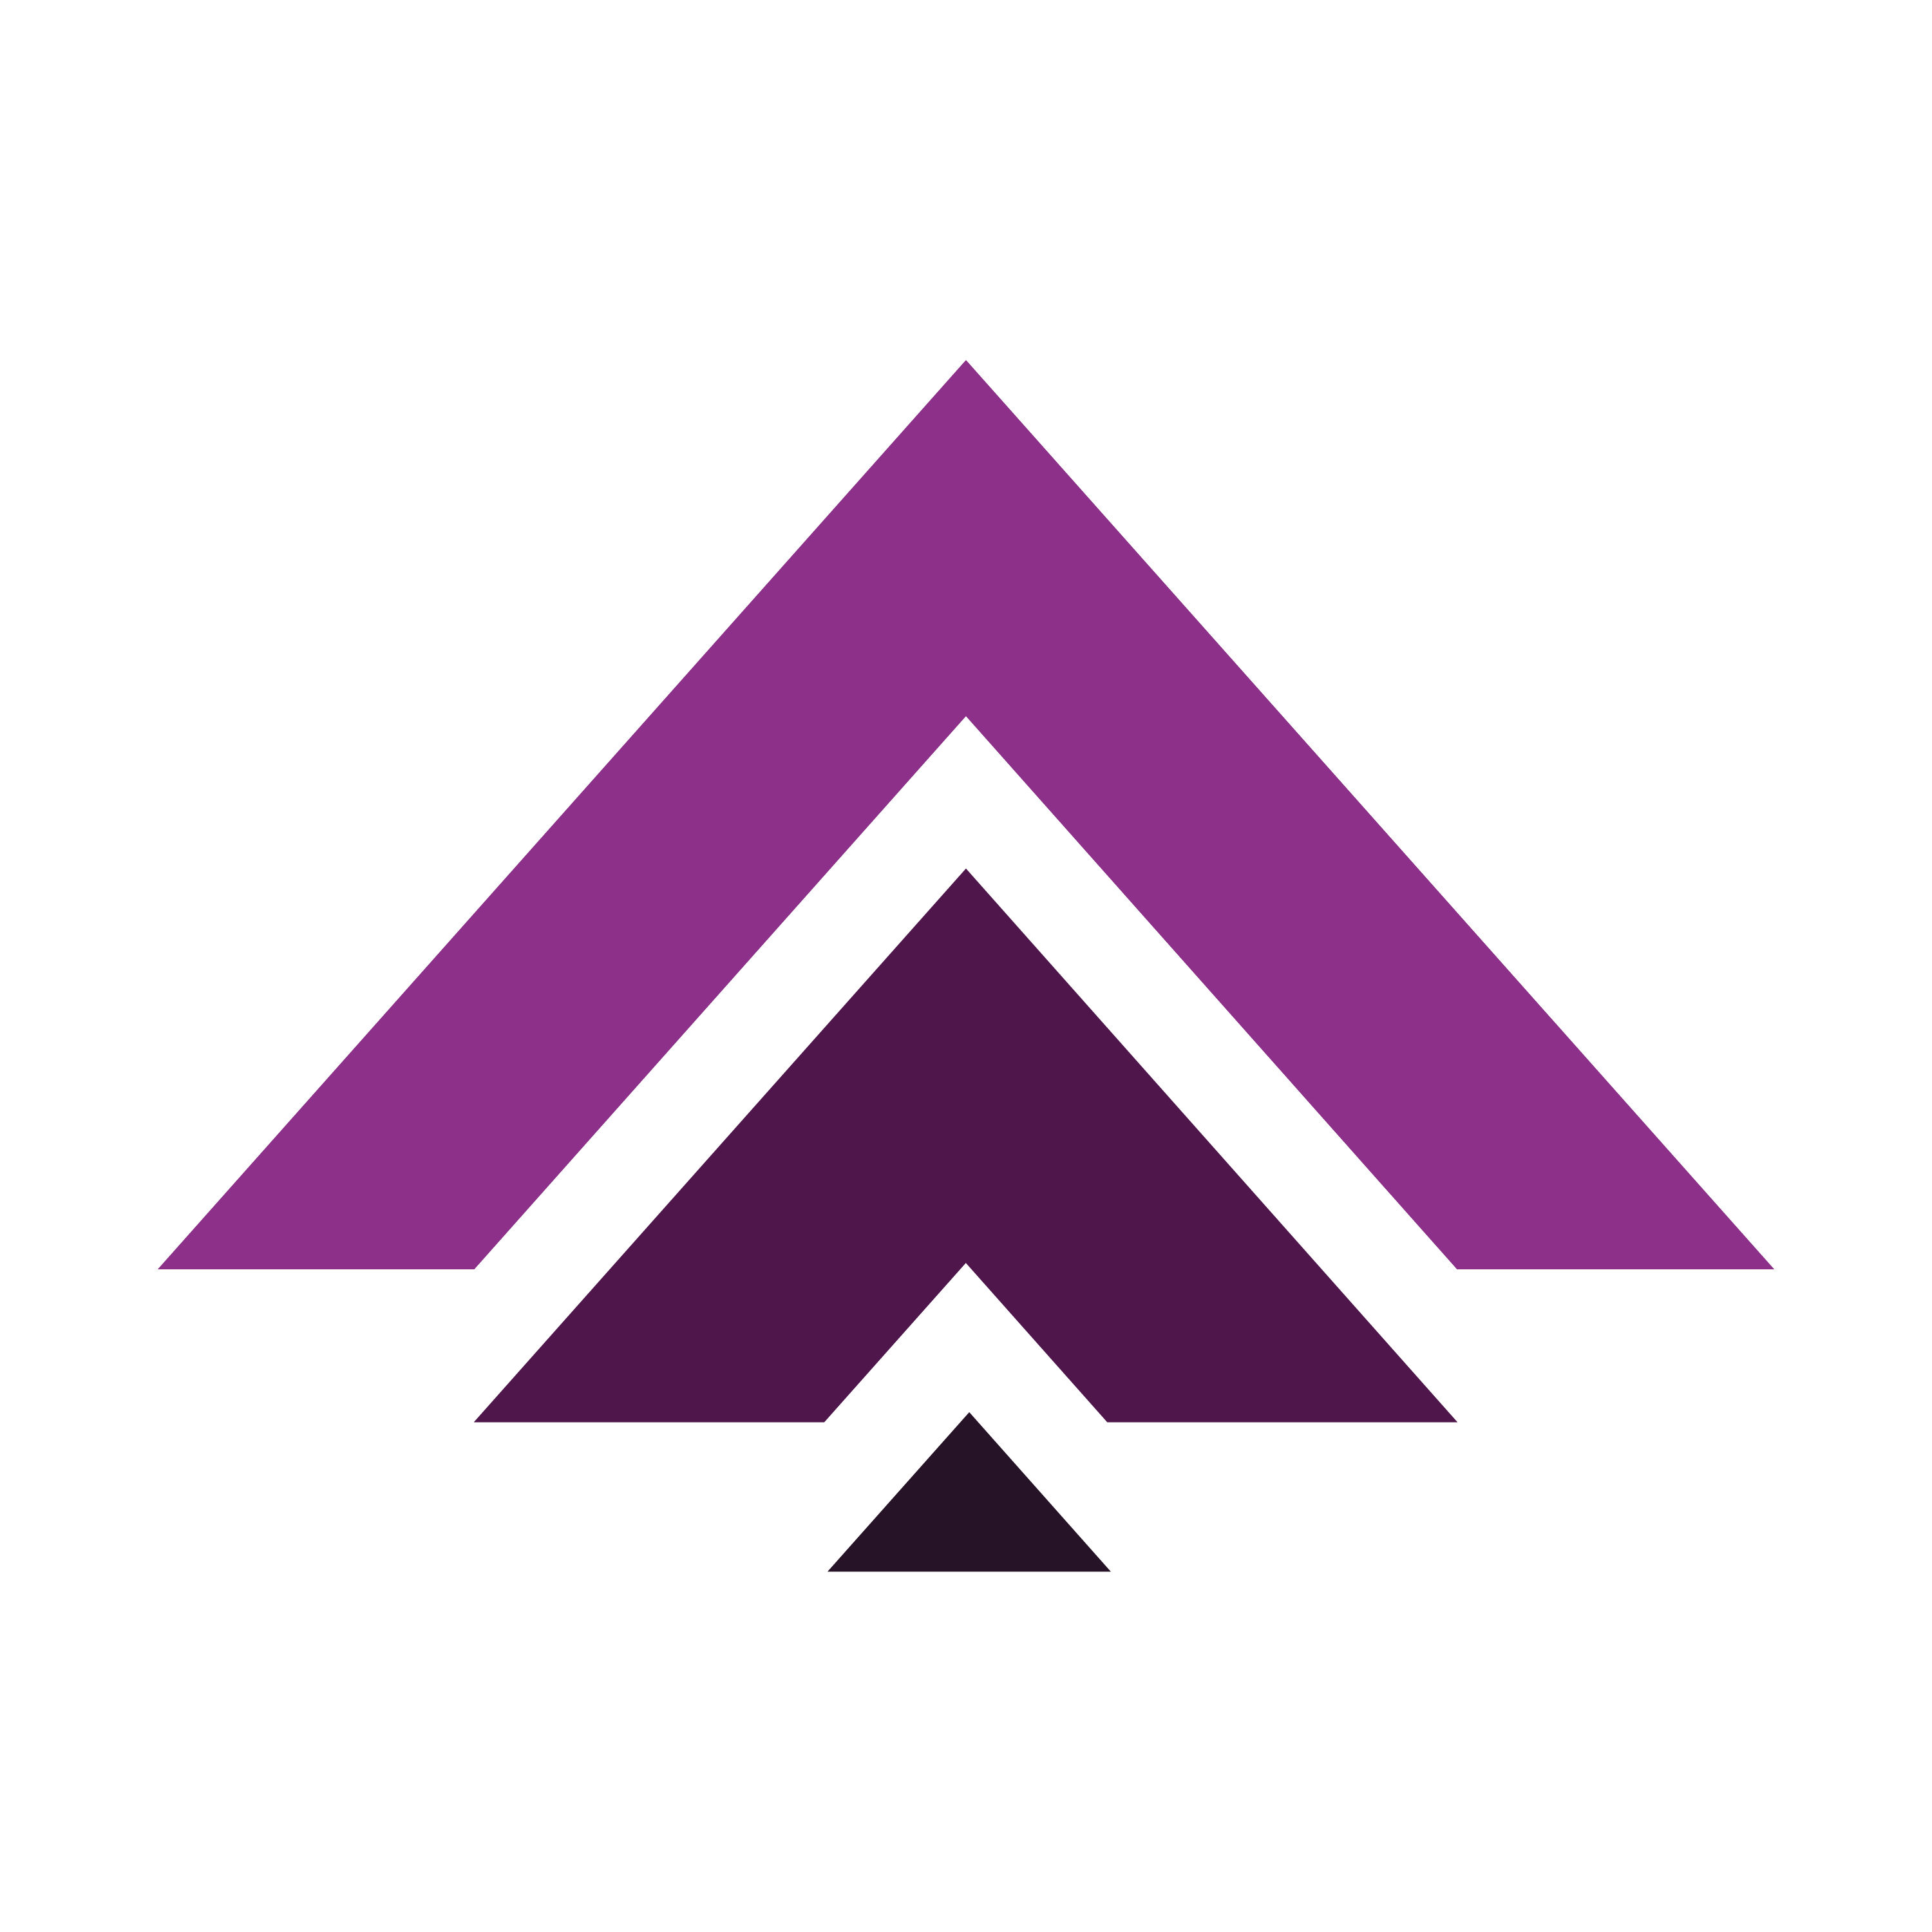 Three upward facing arrows in shades of purple